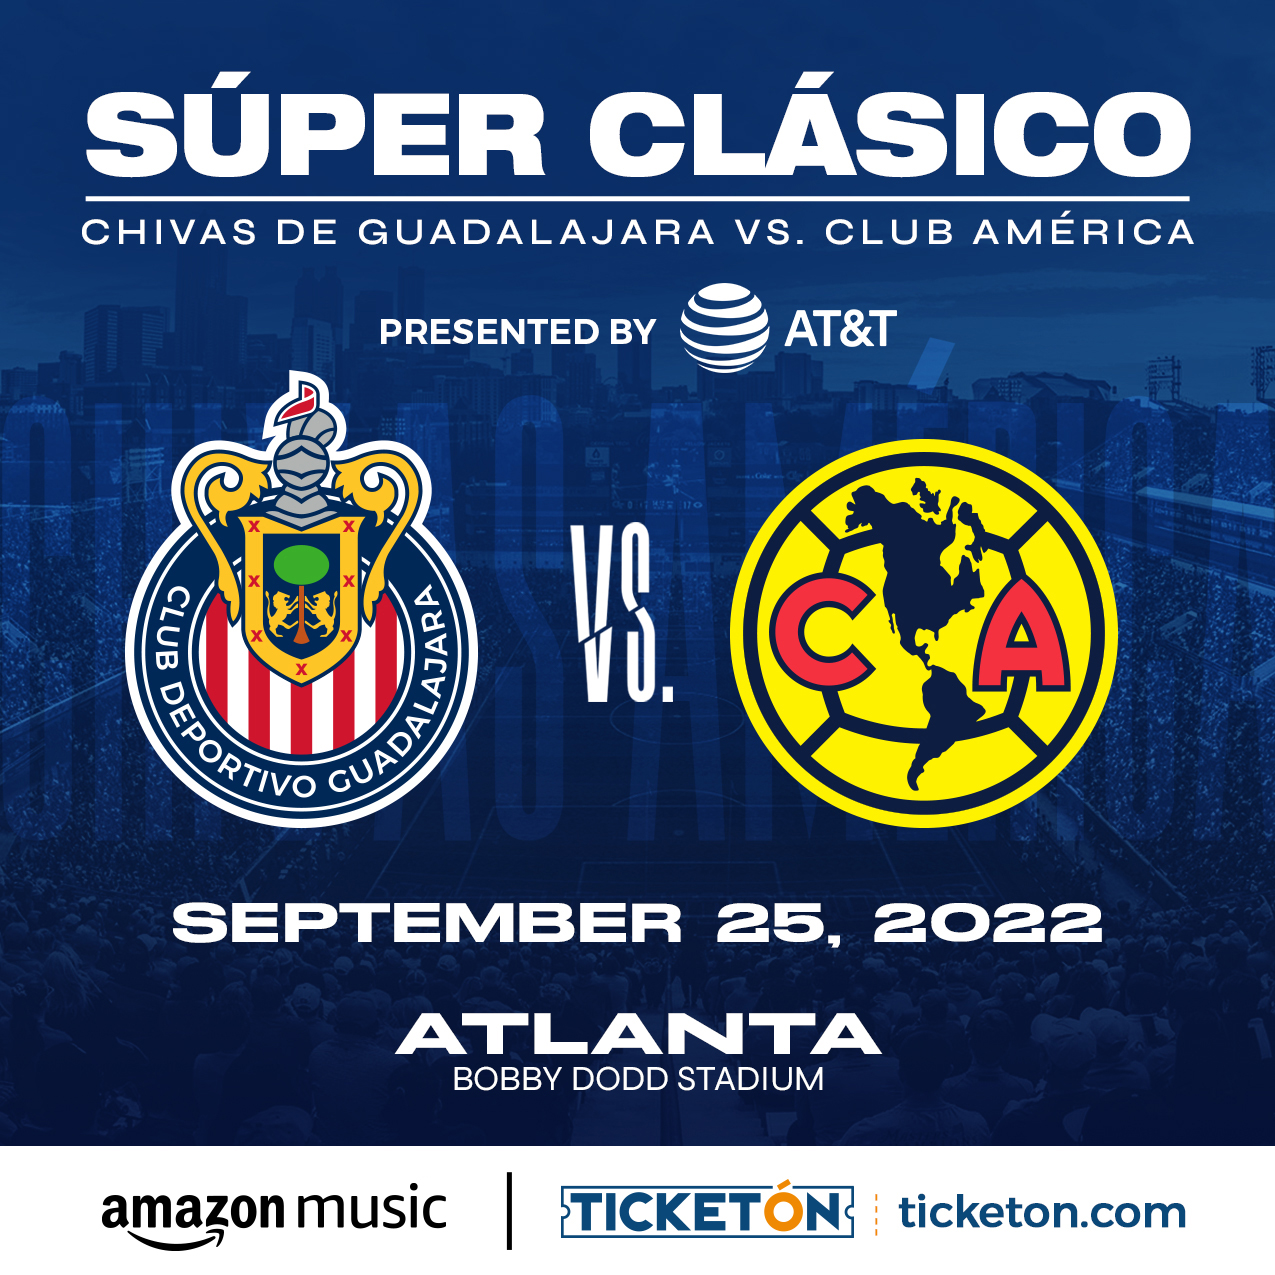 Chivas de Guadalajara vs Club America Bobby Dodd Stadium Tickets